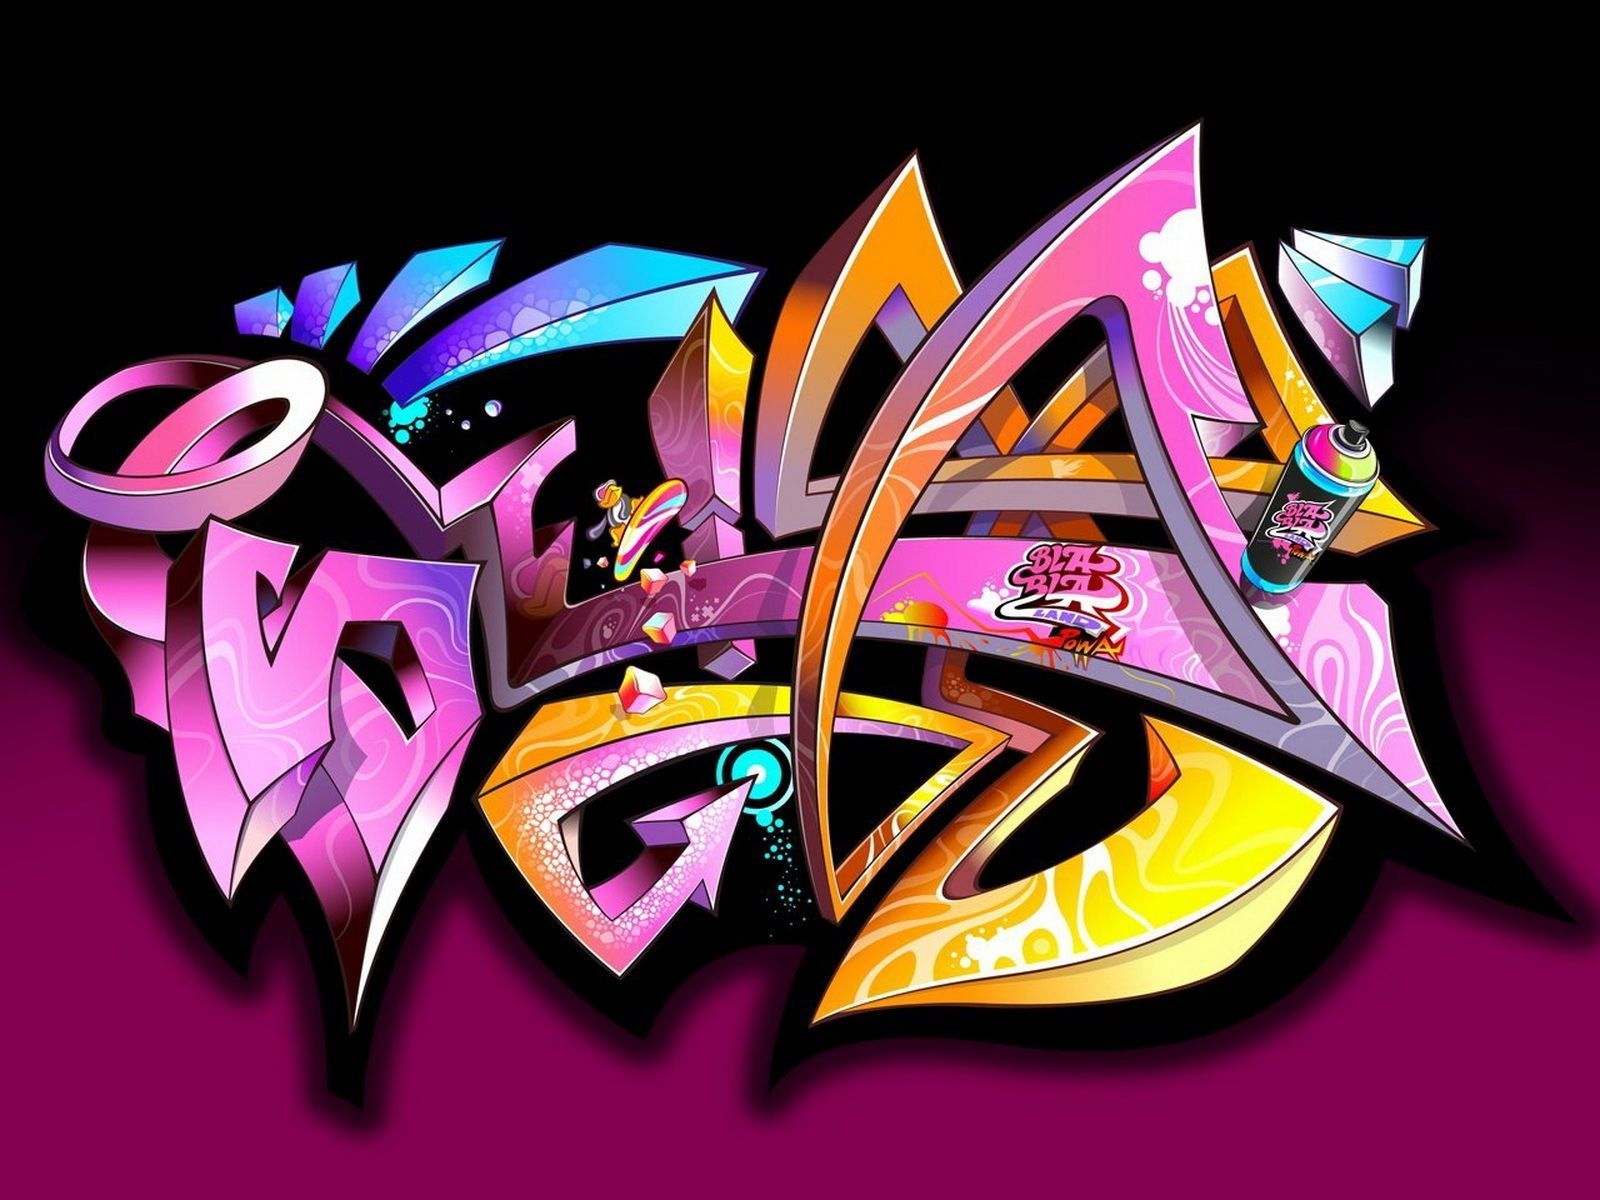 Download Free Graffiti Wallpaper Images For Laptop & Desktops